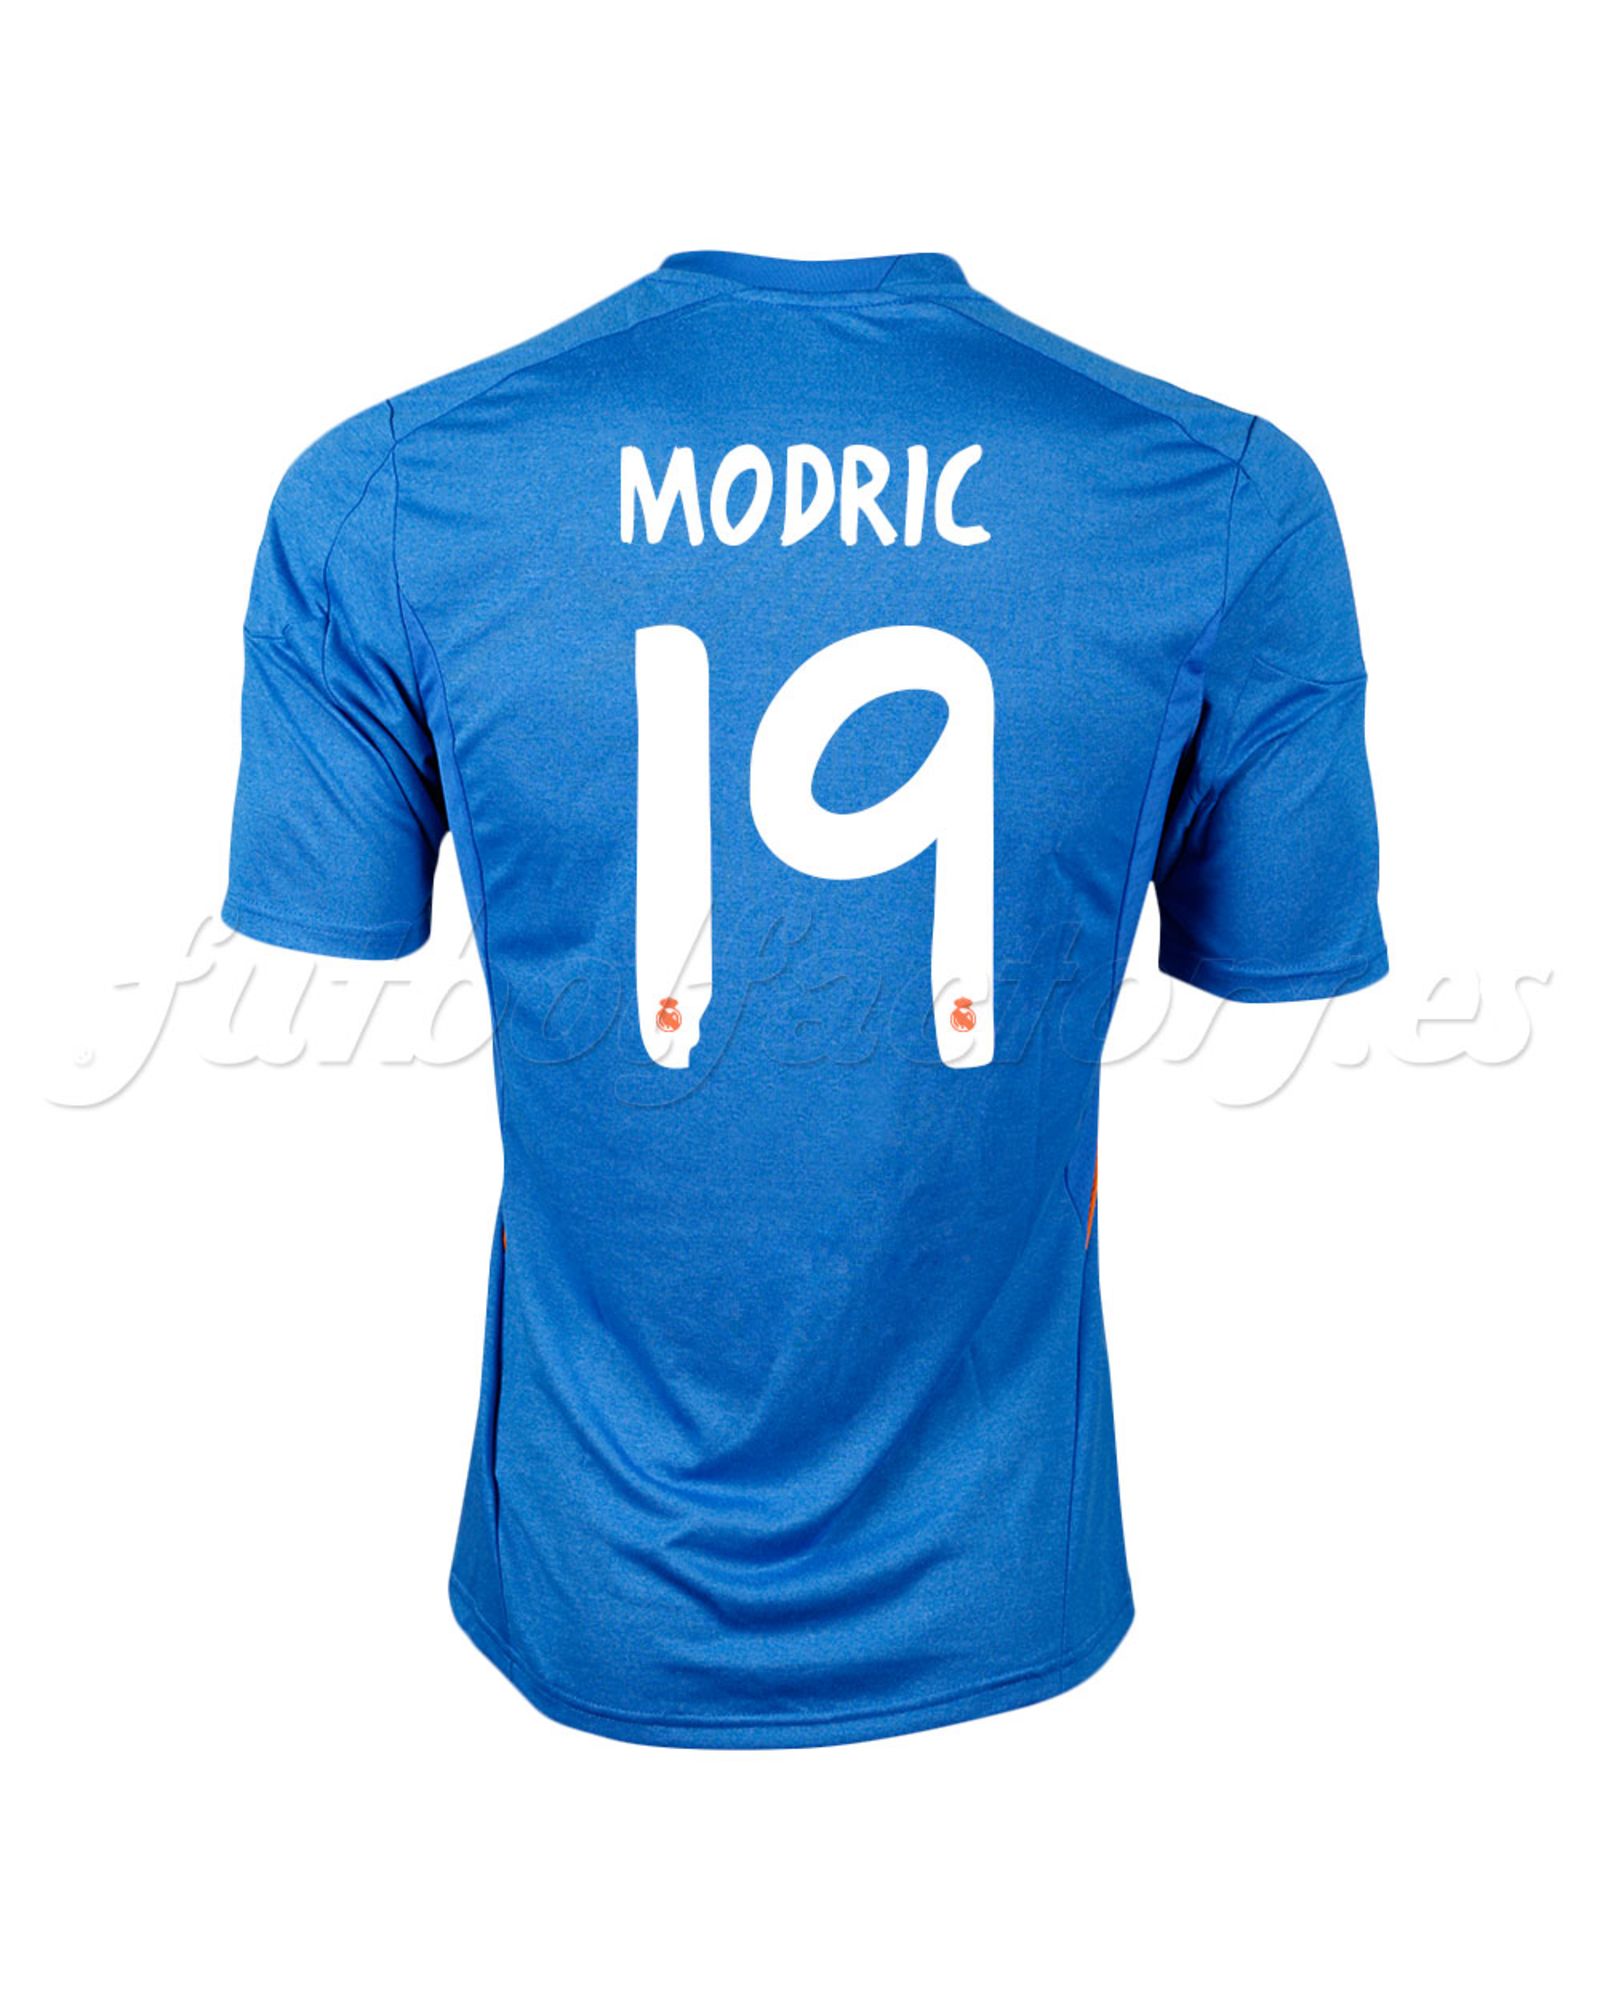 Camiseta Real Madrid Modric 2ª 2013/2014 - Fútbol Factory